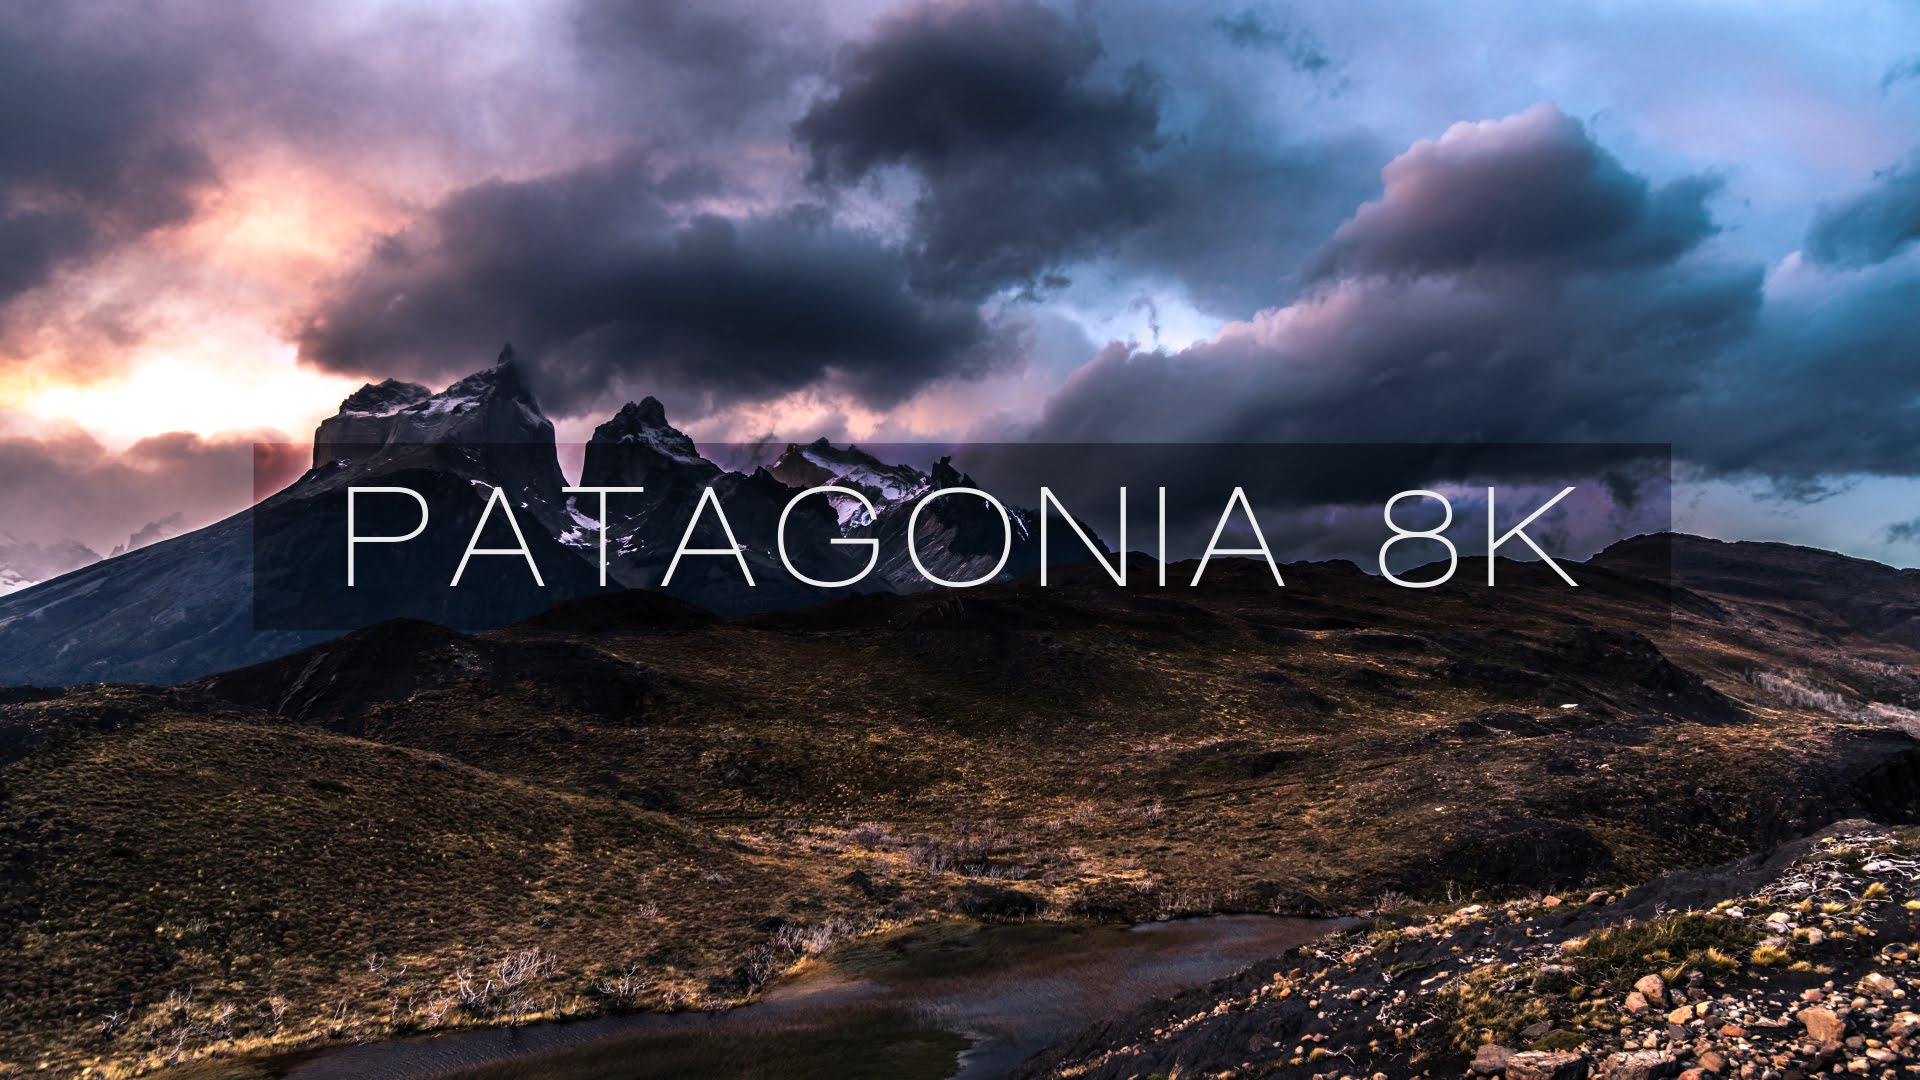 C’est joli la Patagonie